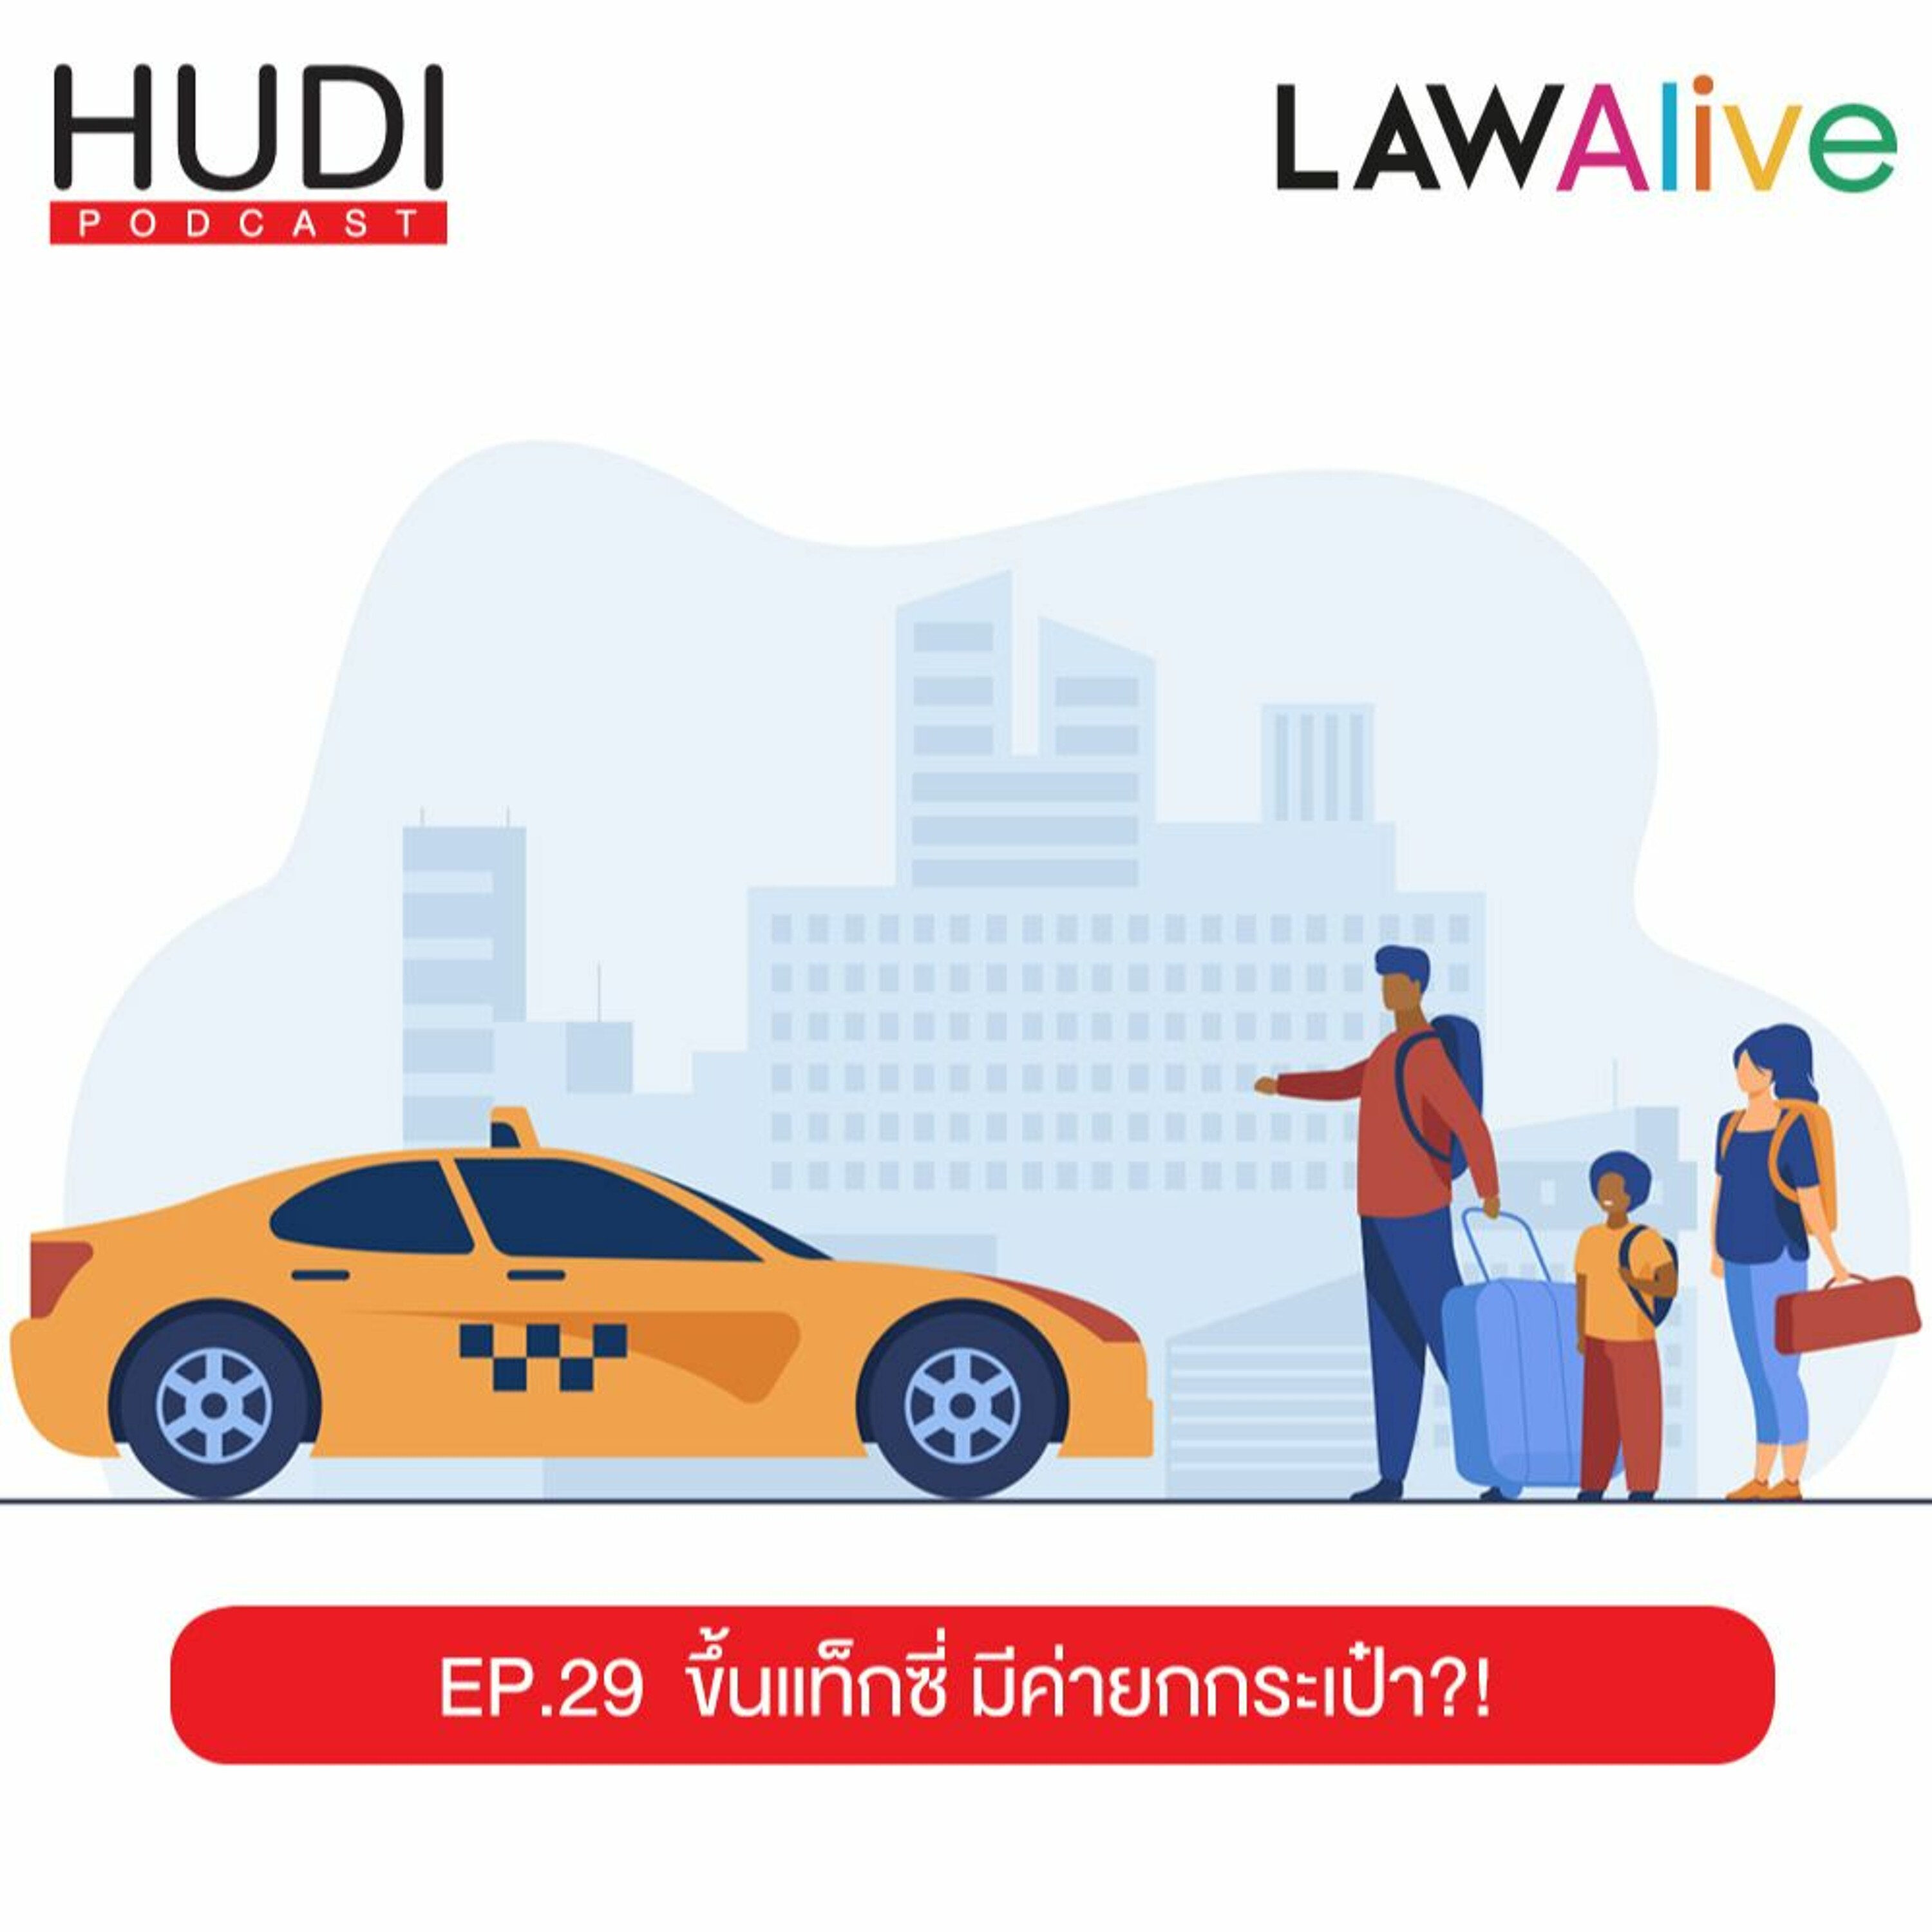 Law Alive Ep.29 - ขึ้นแท็กซี่ มีค่ายกกระเป๋า?!